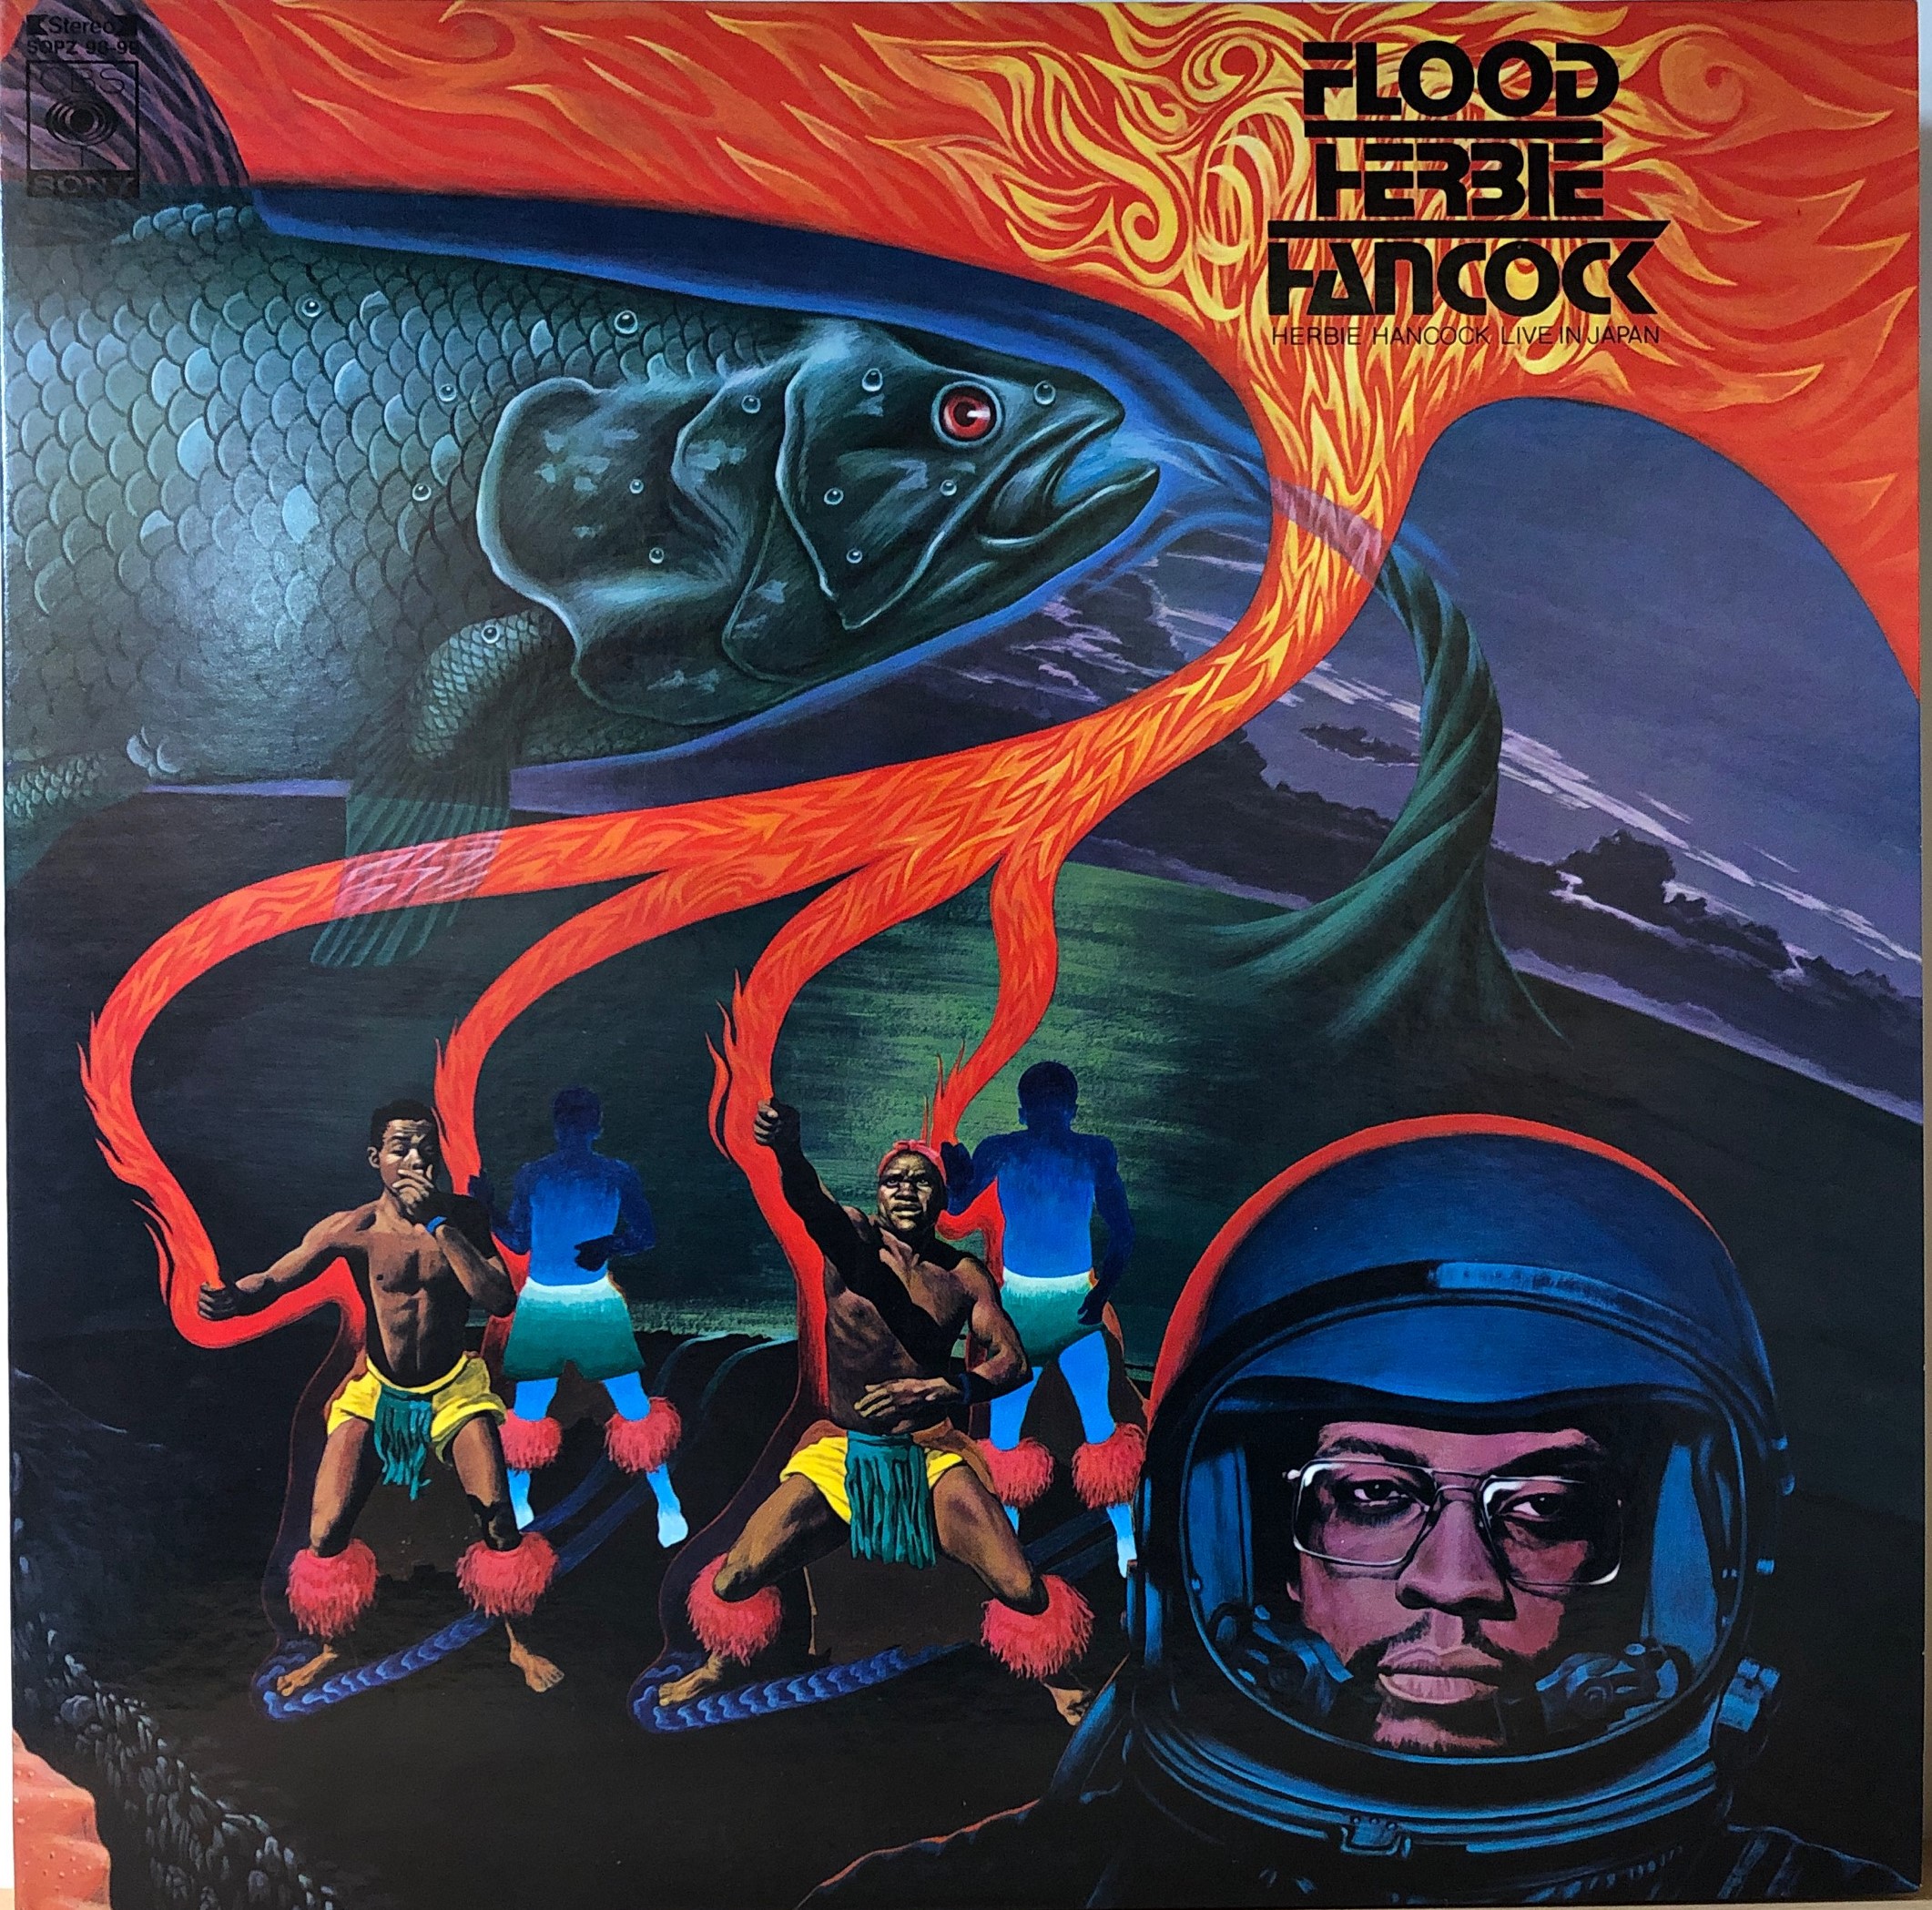 Herbie Hancock ‎– Flood | 中古レコード通販・買取のアカル・レコーズ